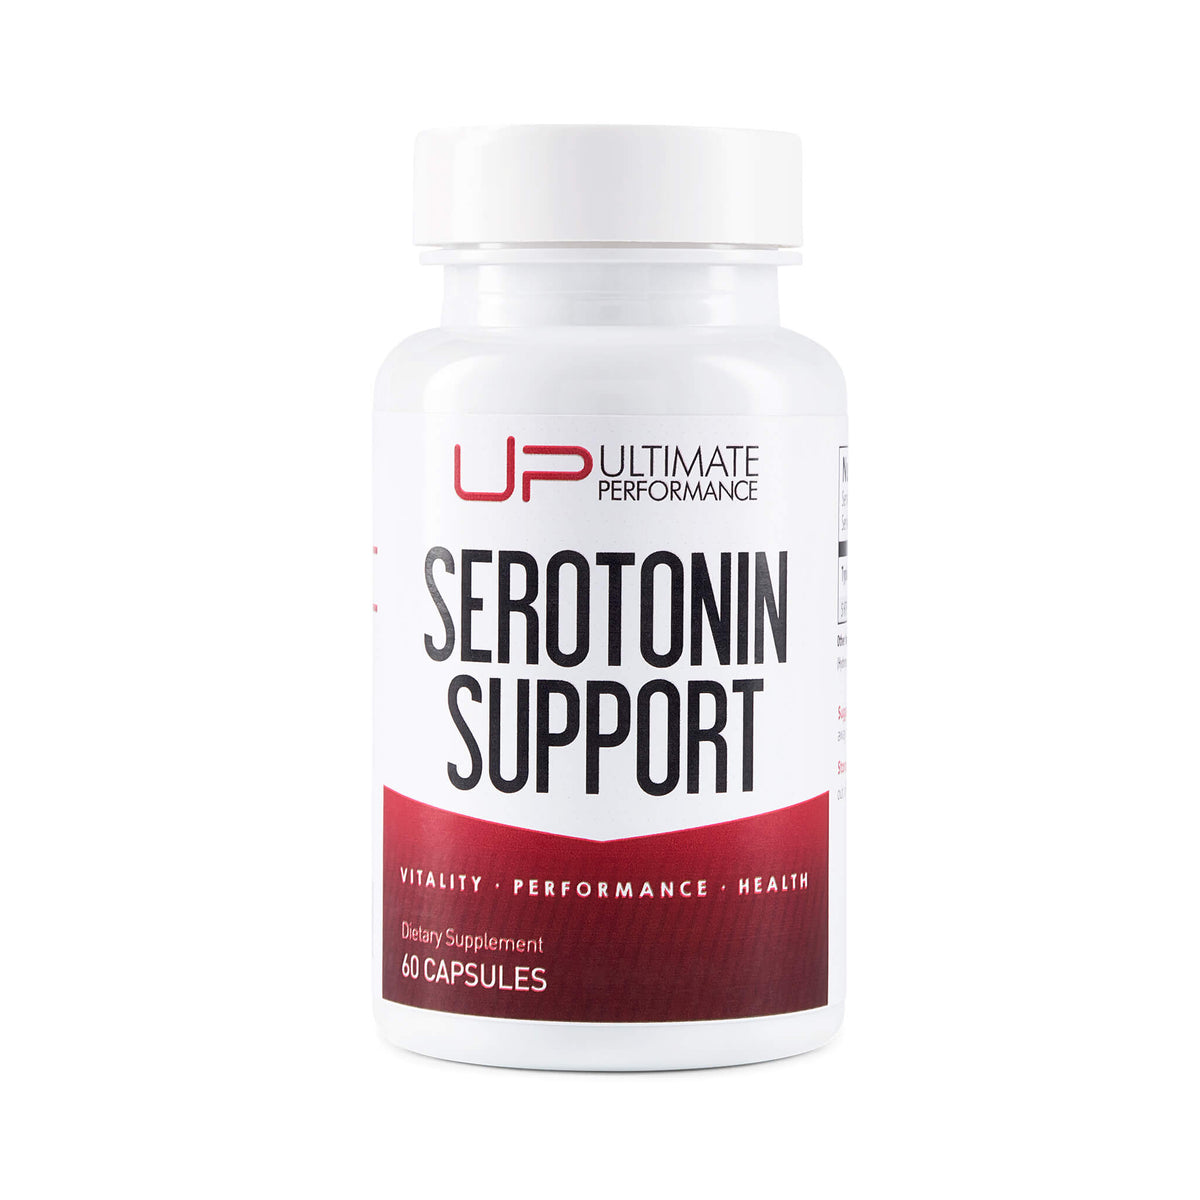 Serotonin Support